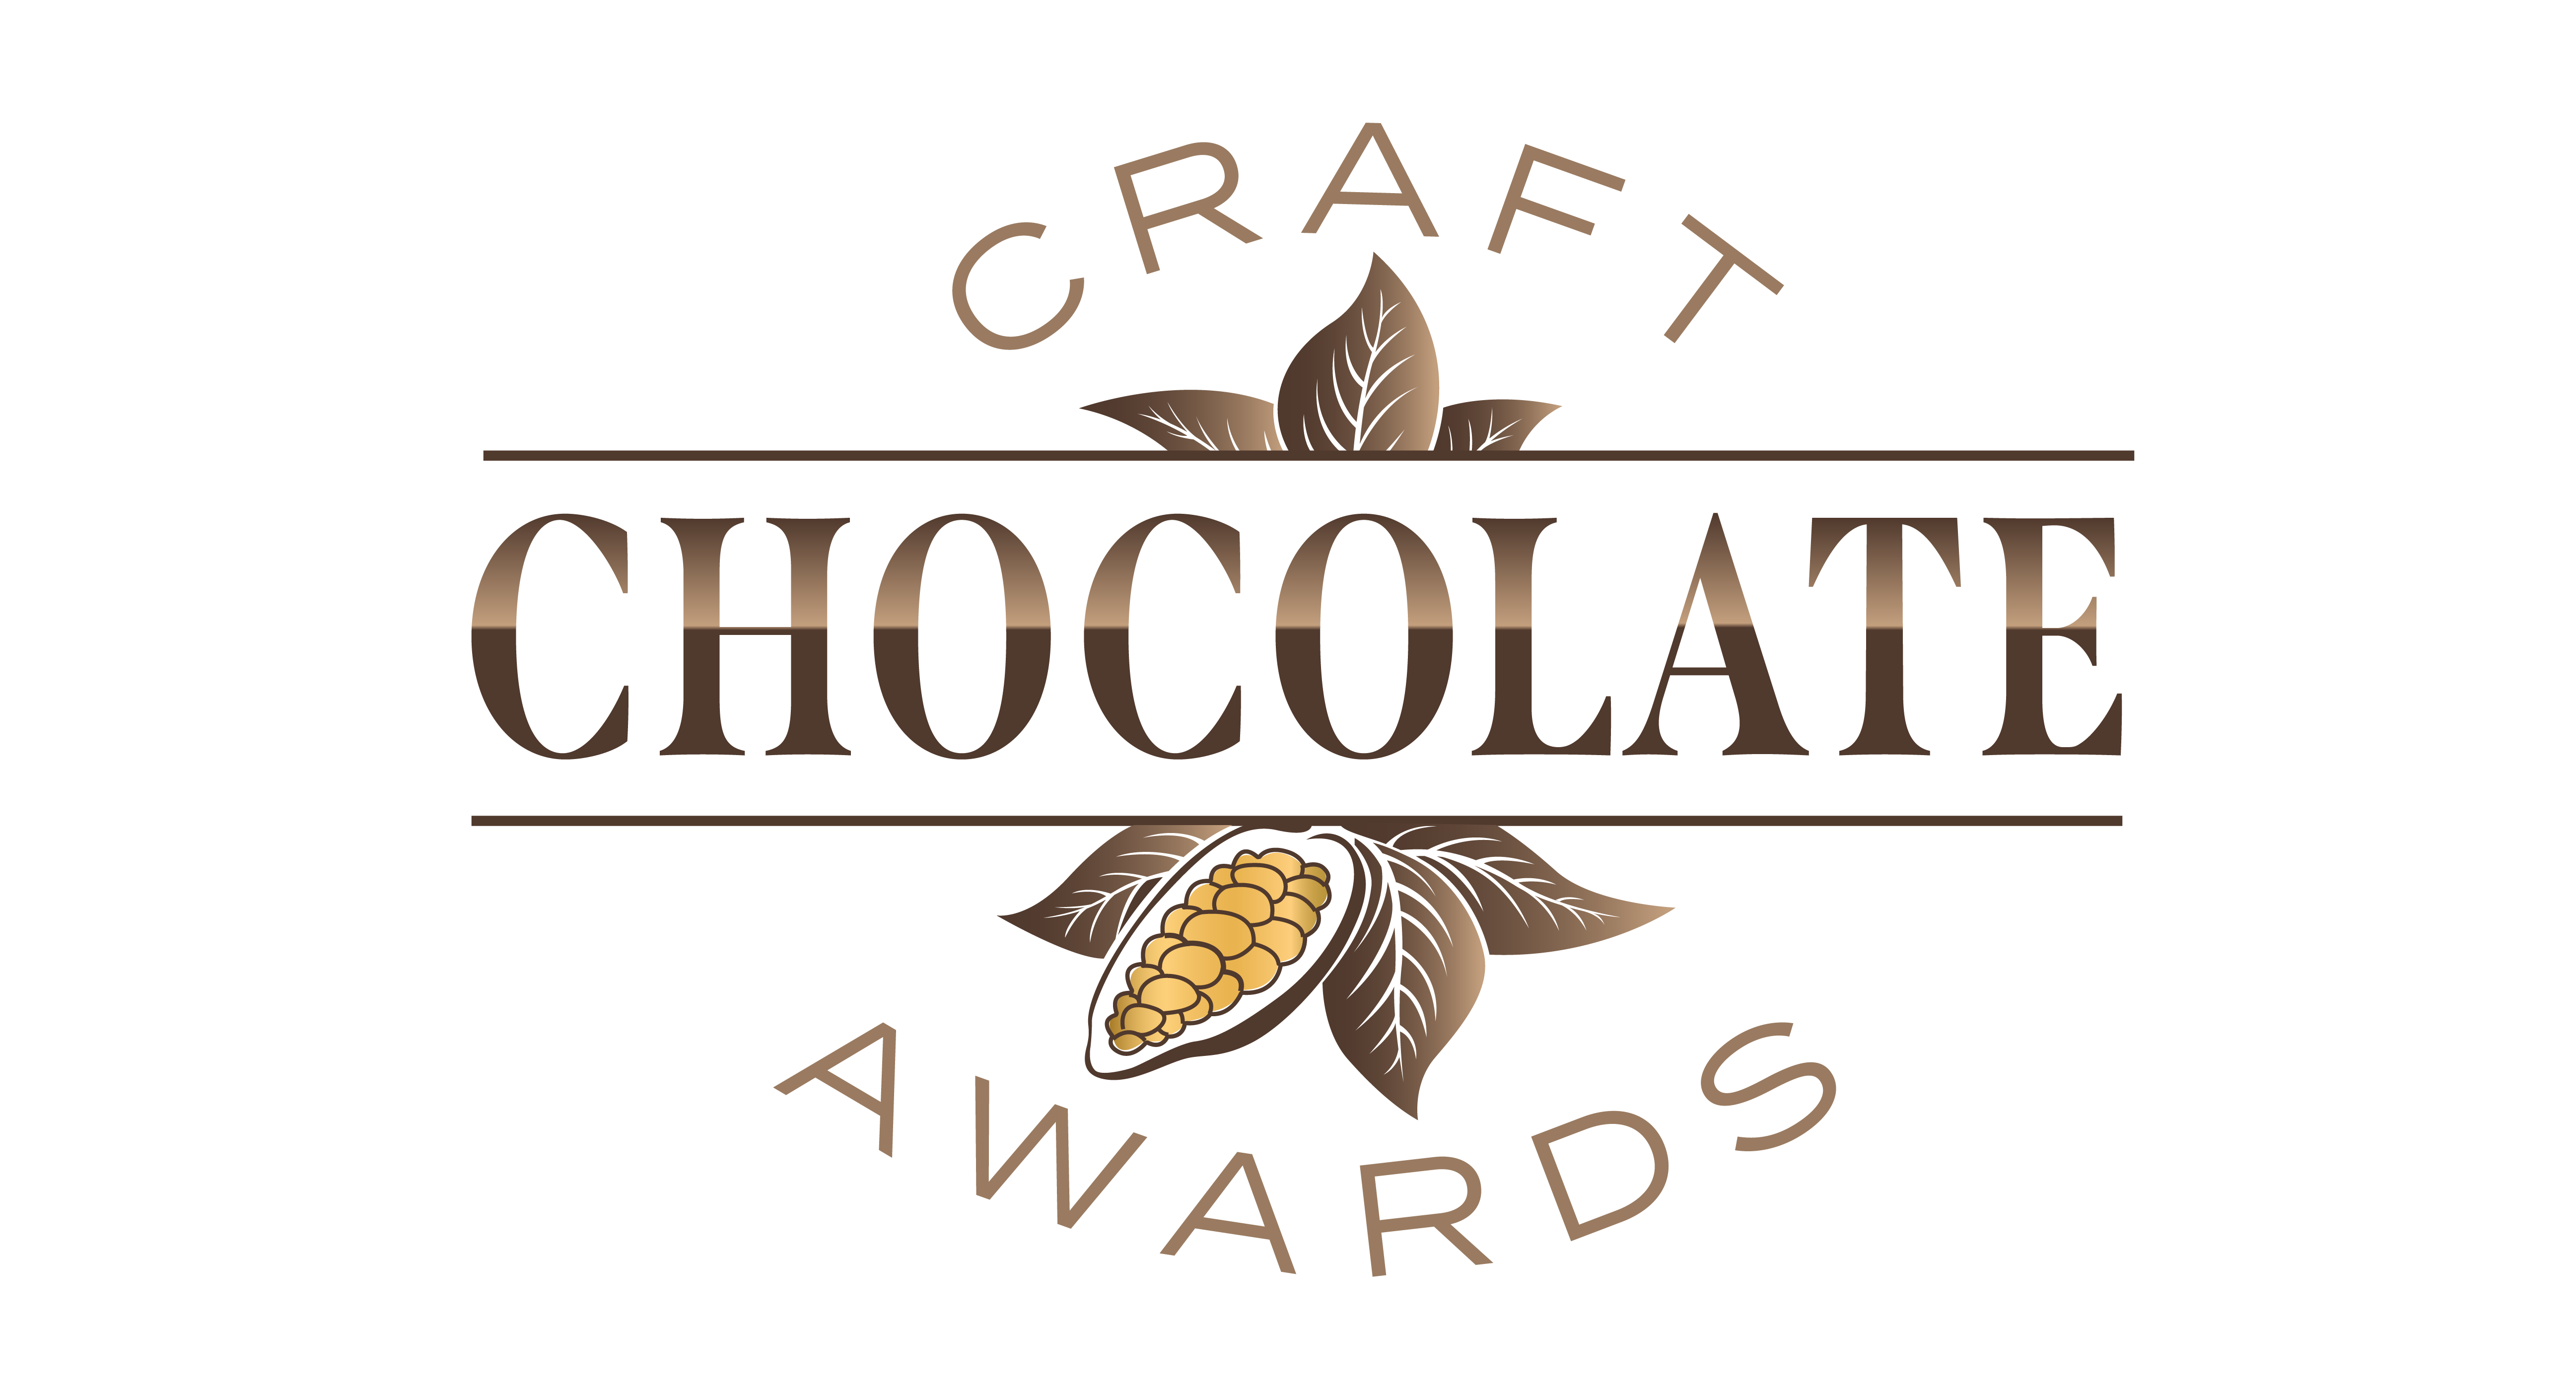 The Craft Chocolate Awards Logo